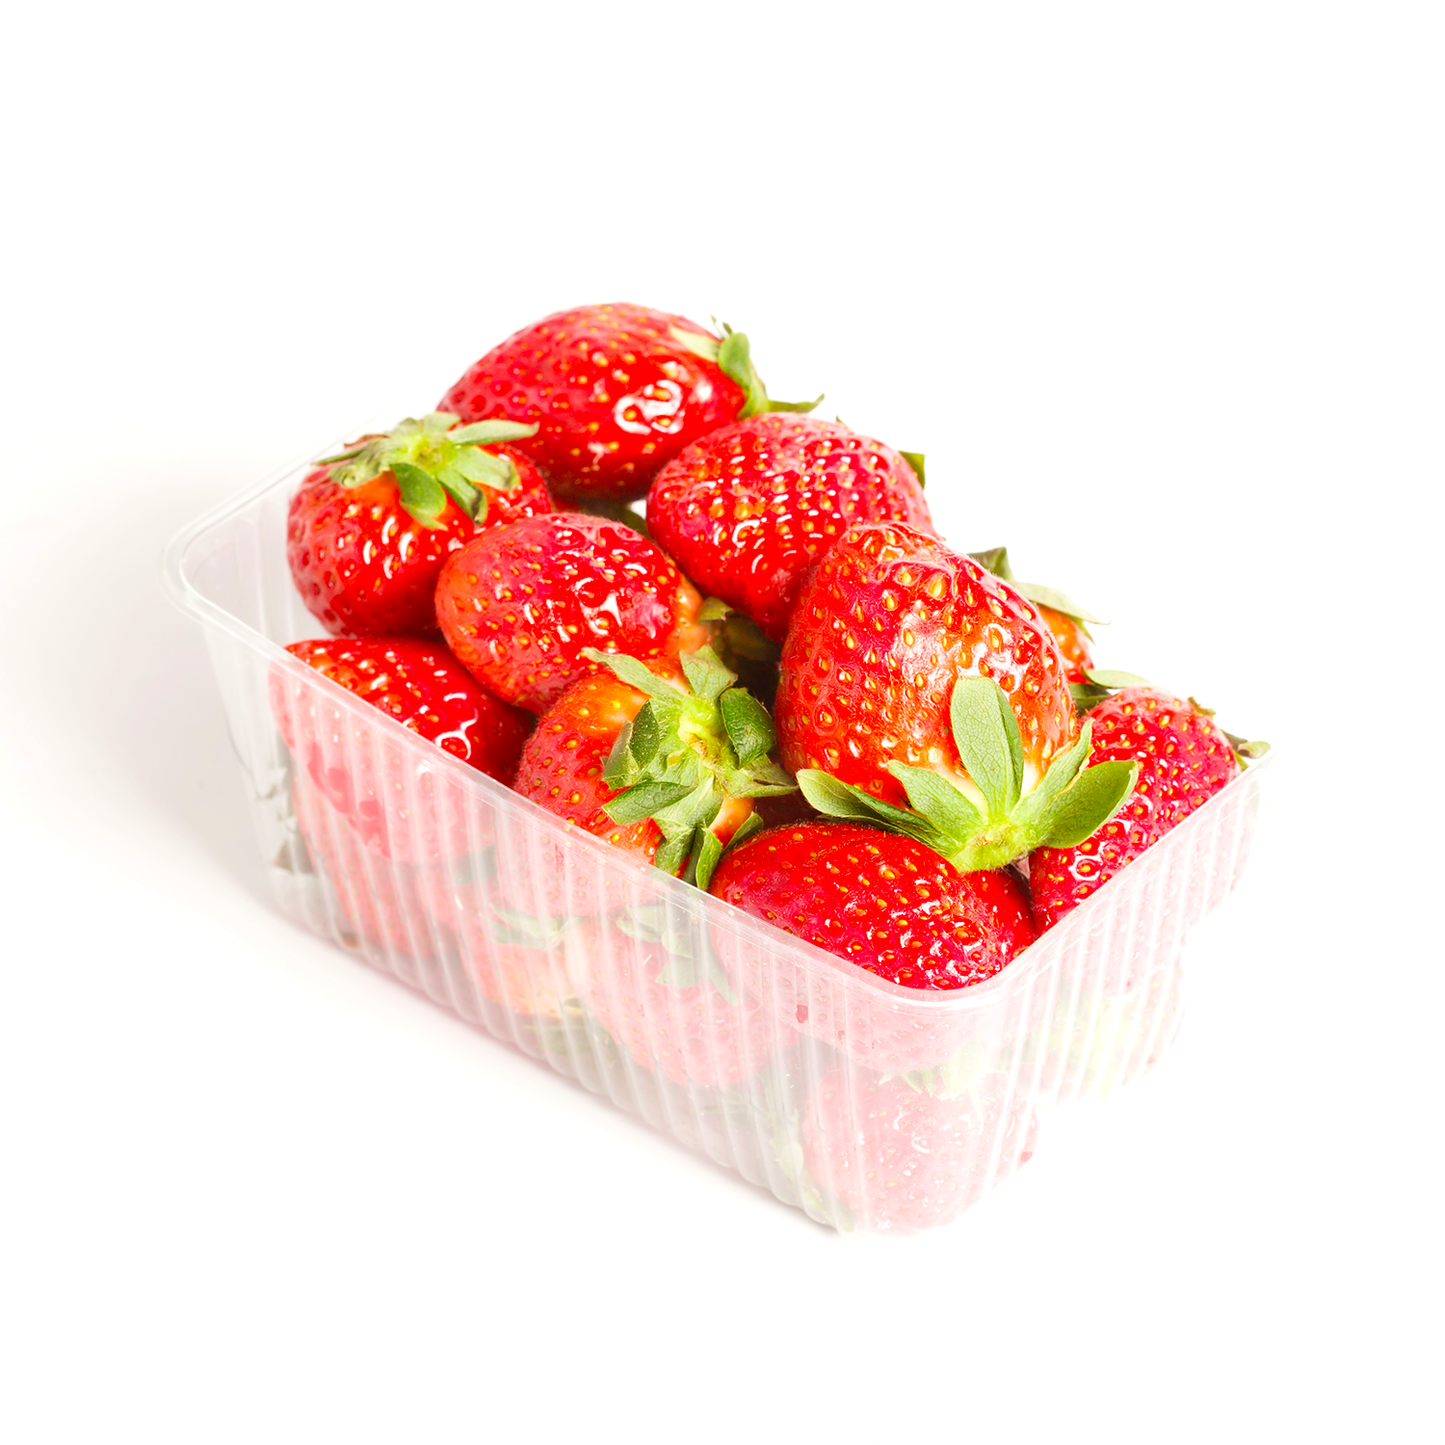 Strawberry / 1 box-16 oz